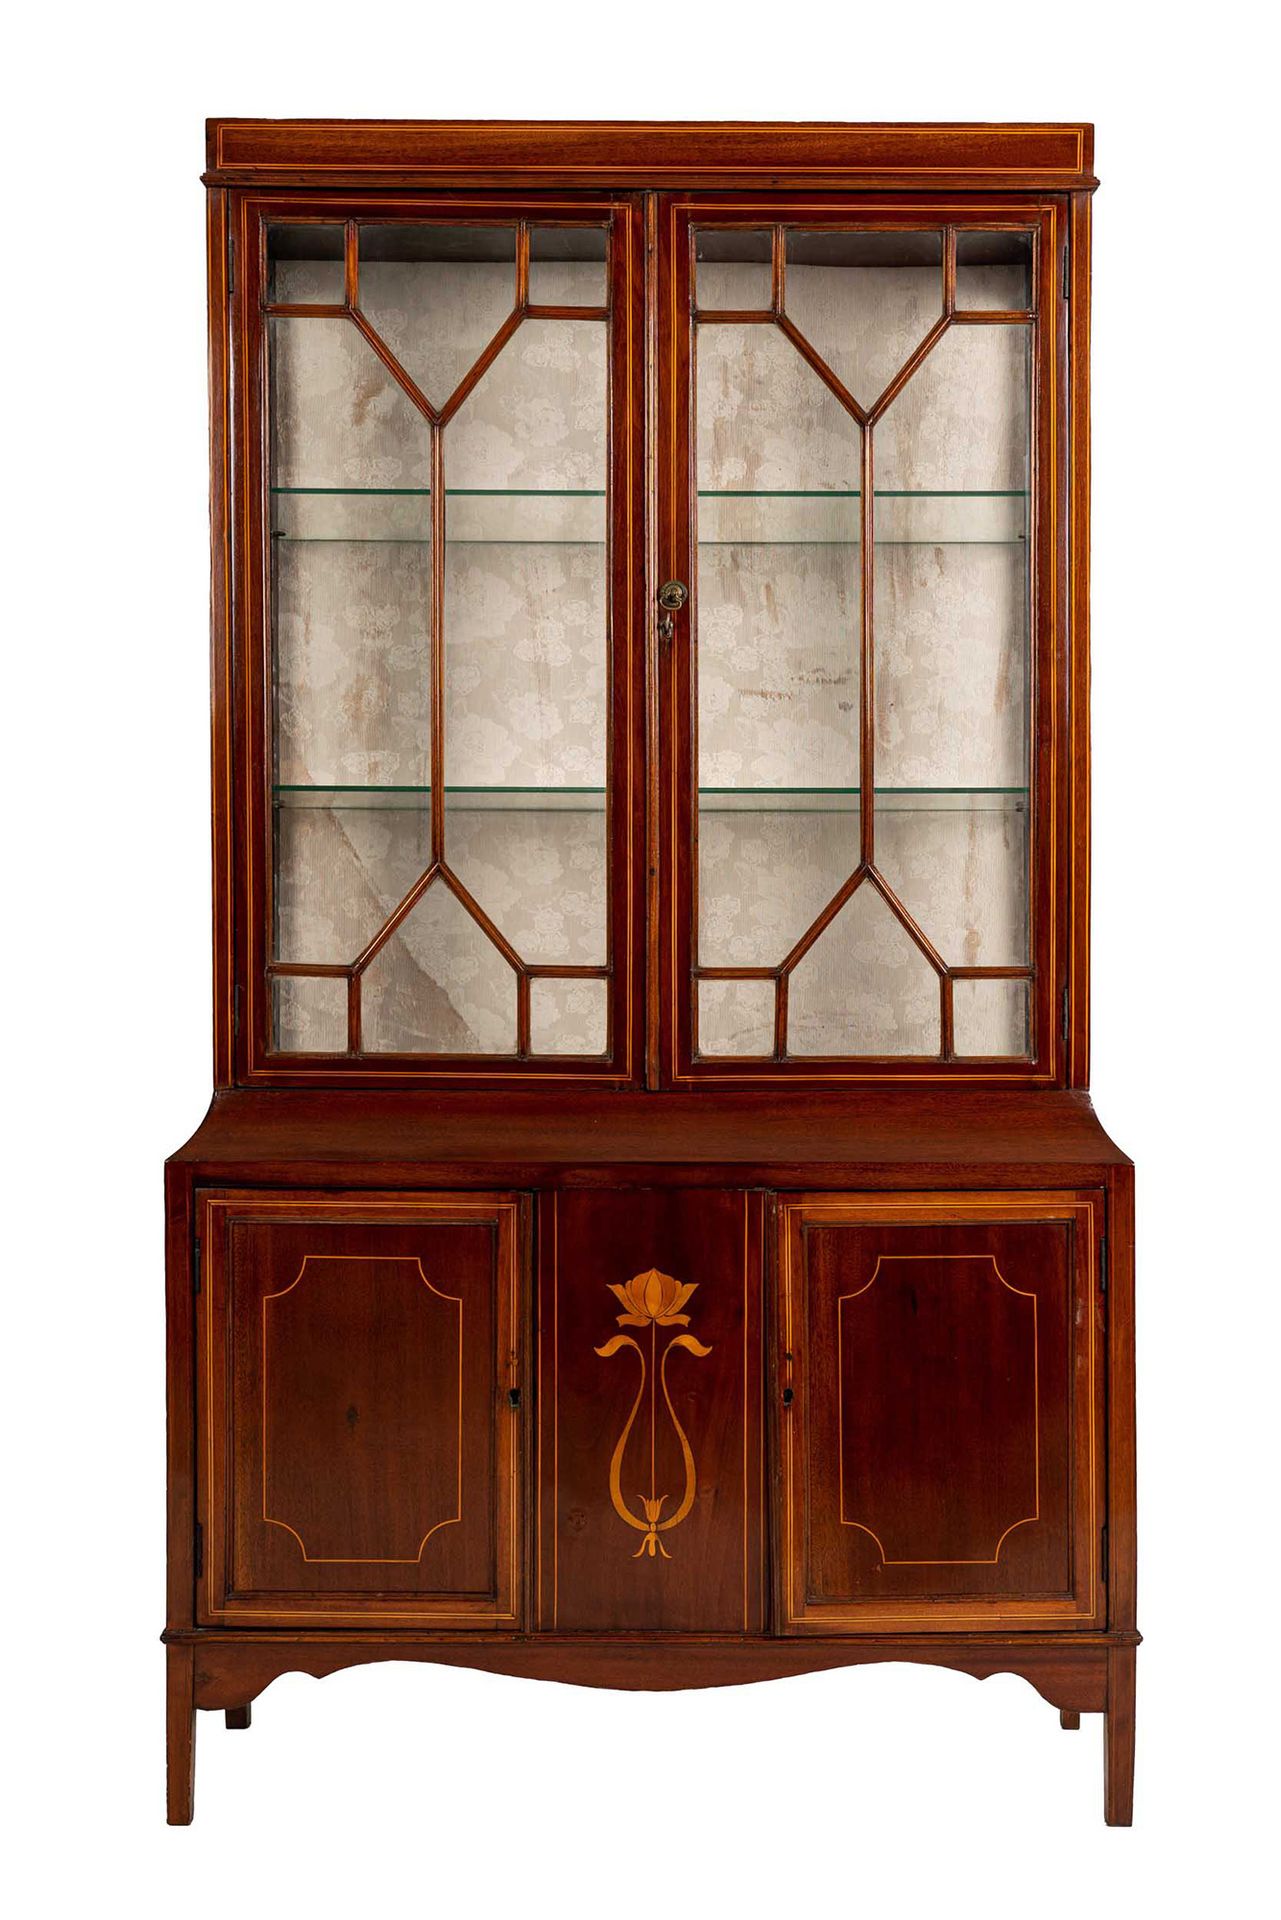 Null 双体展示

英国 20世纪初

桃花心木镶嵌花卉图案，上面有两个玻璃门，下面有两个门

96x32.4x168.6厘米